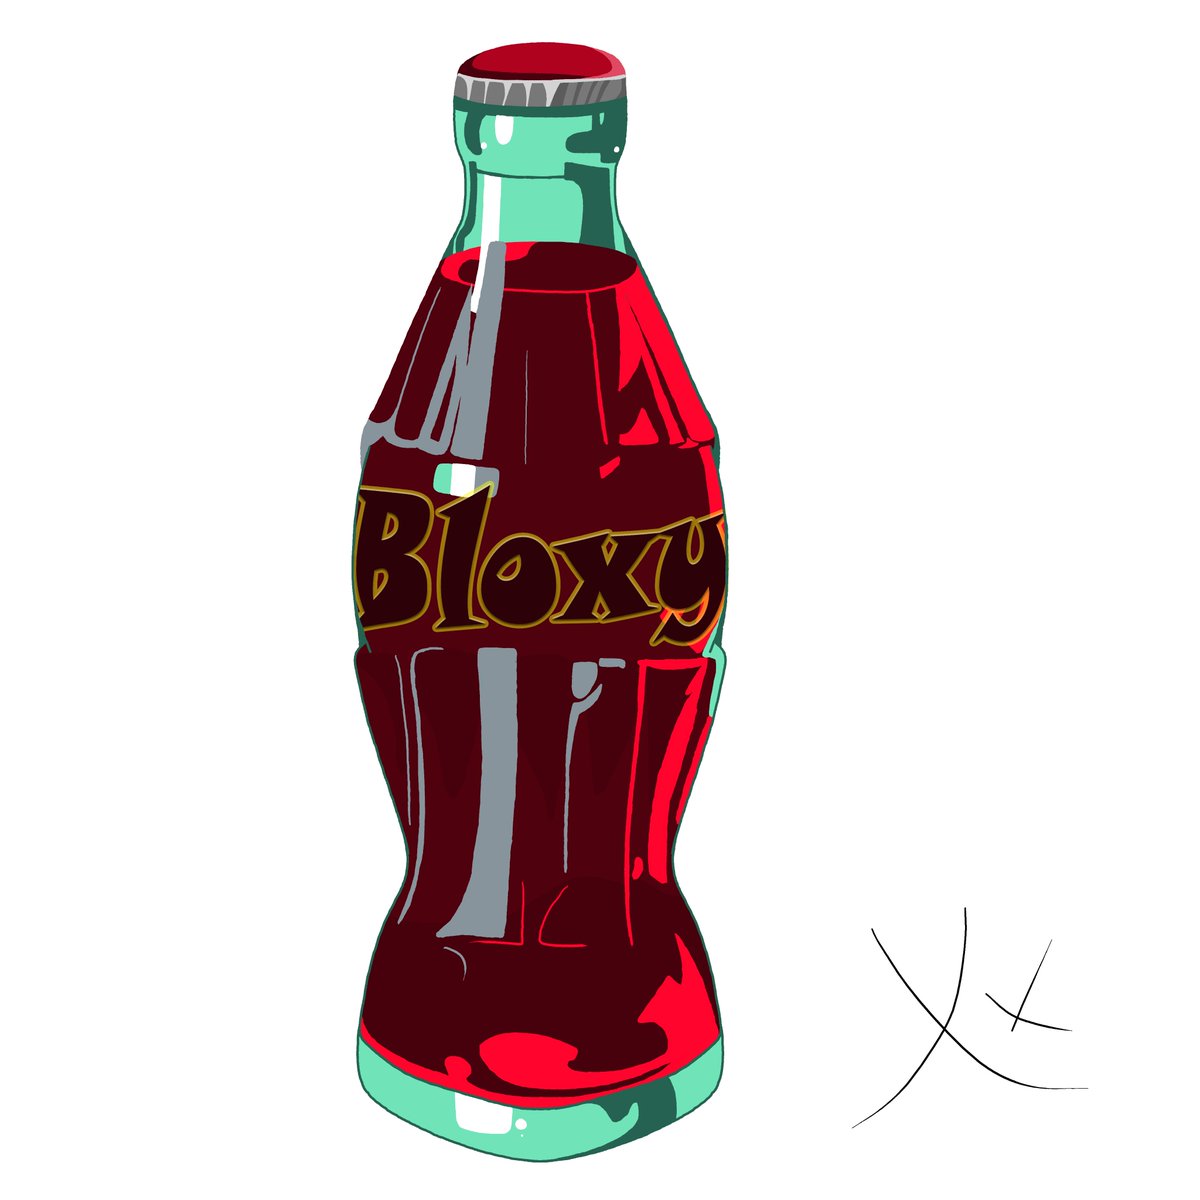 Duffyxx On Twitter Inktober Day 18 Bottle Bloxy Cola